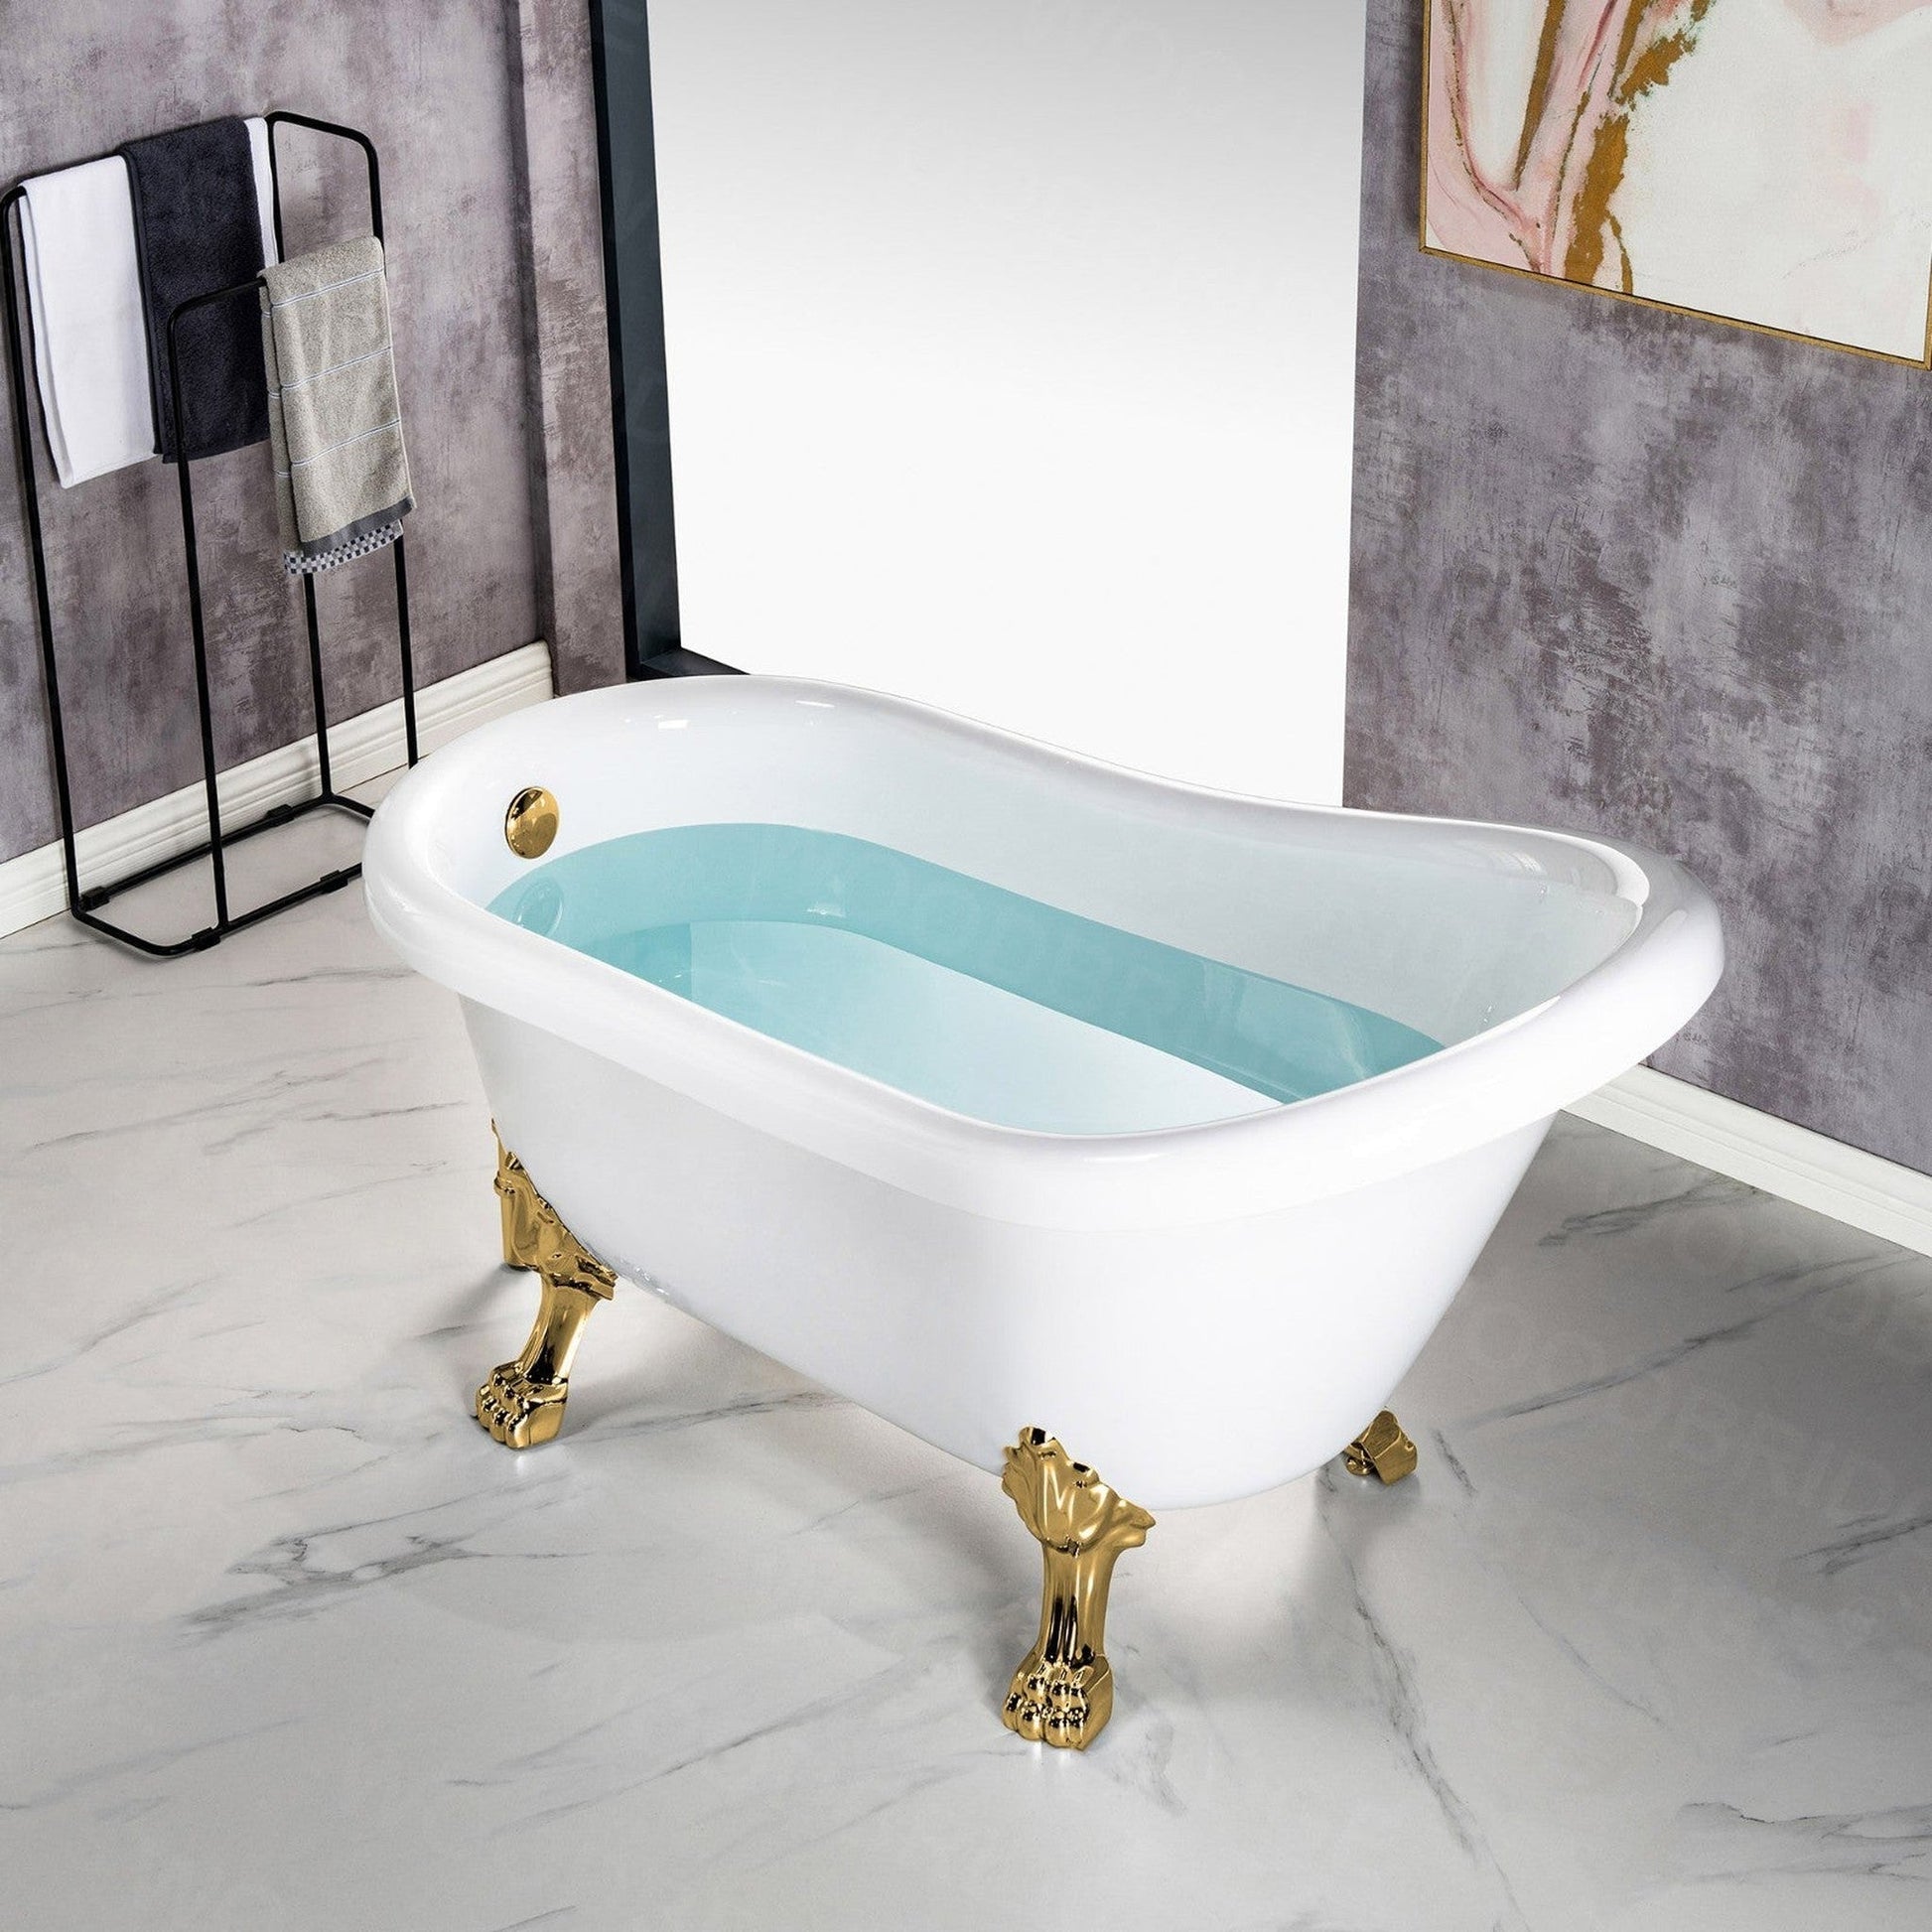 WoodBridge 54" White Acrylic Slipper Clawfoot Bath Tub With Polished Gold Feet, Drain, Overflow, F-0019PG Tub Filler and Caddy Tray